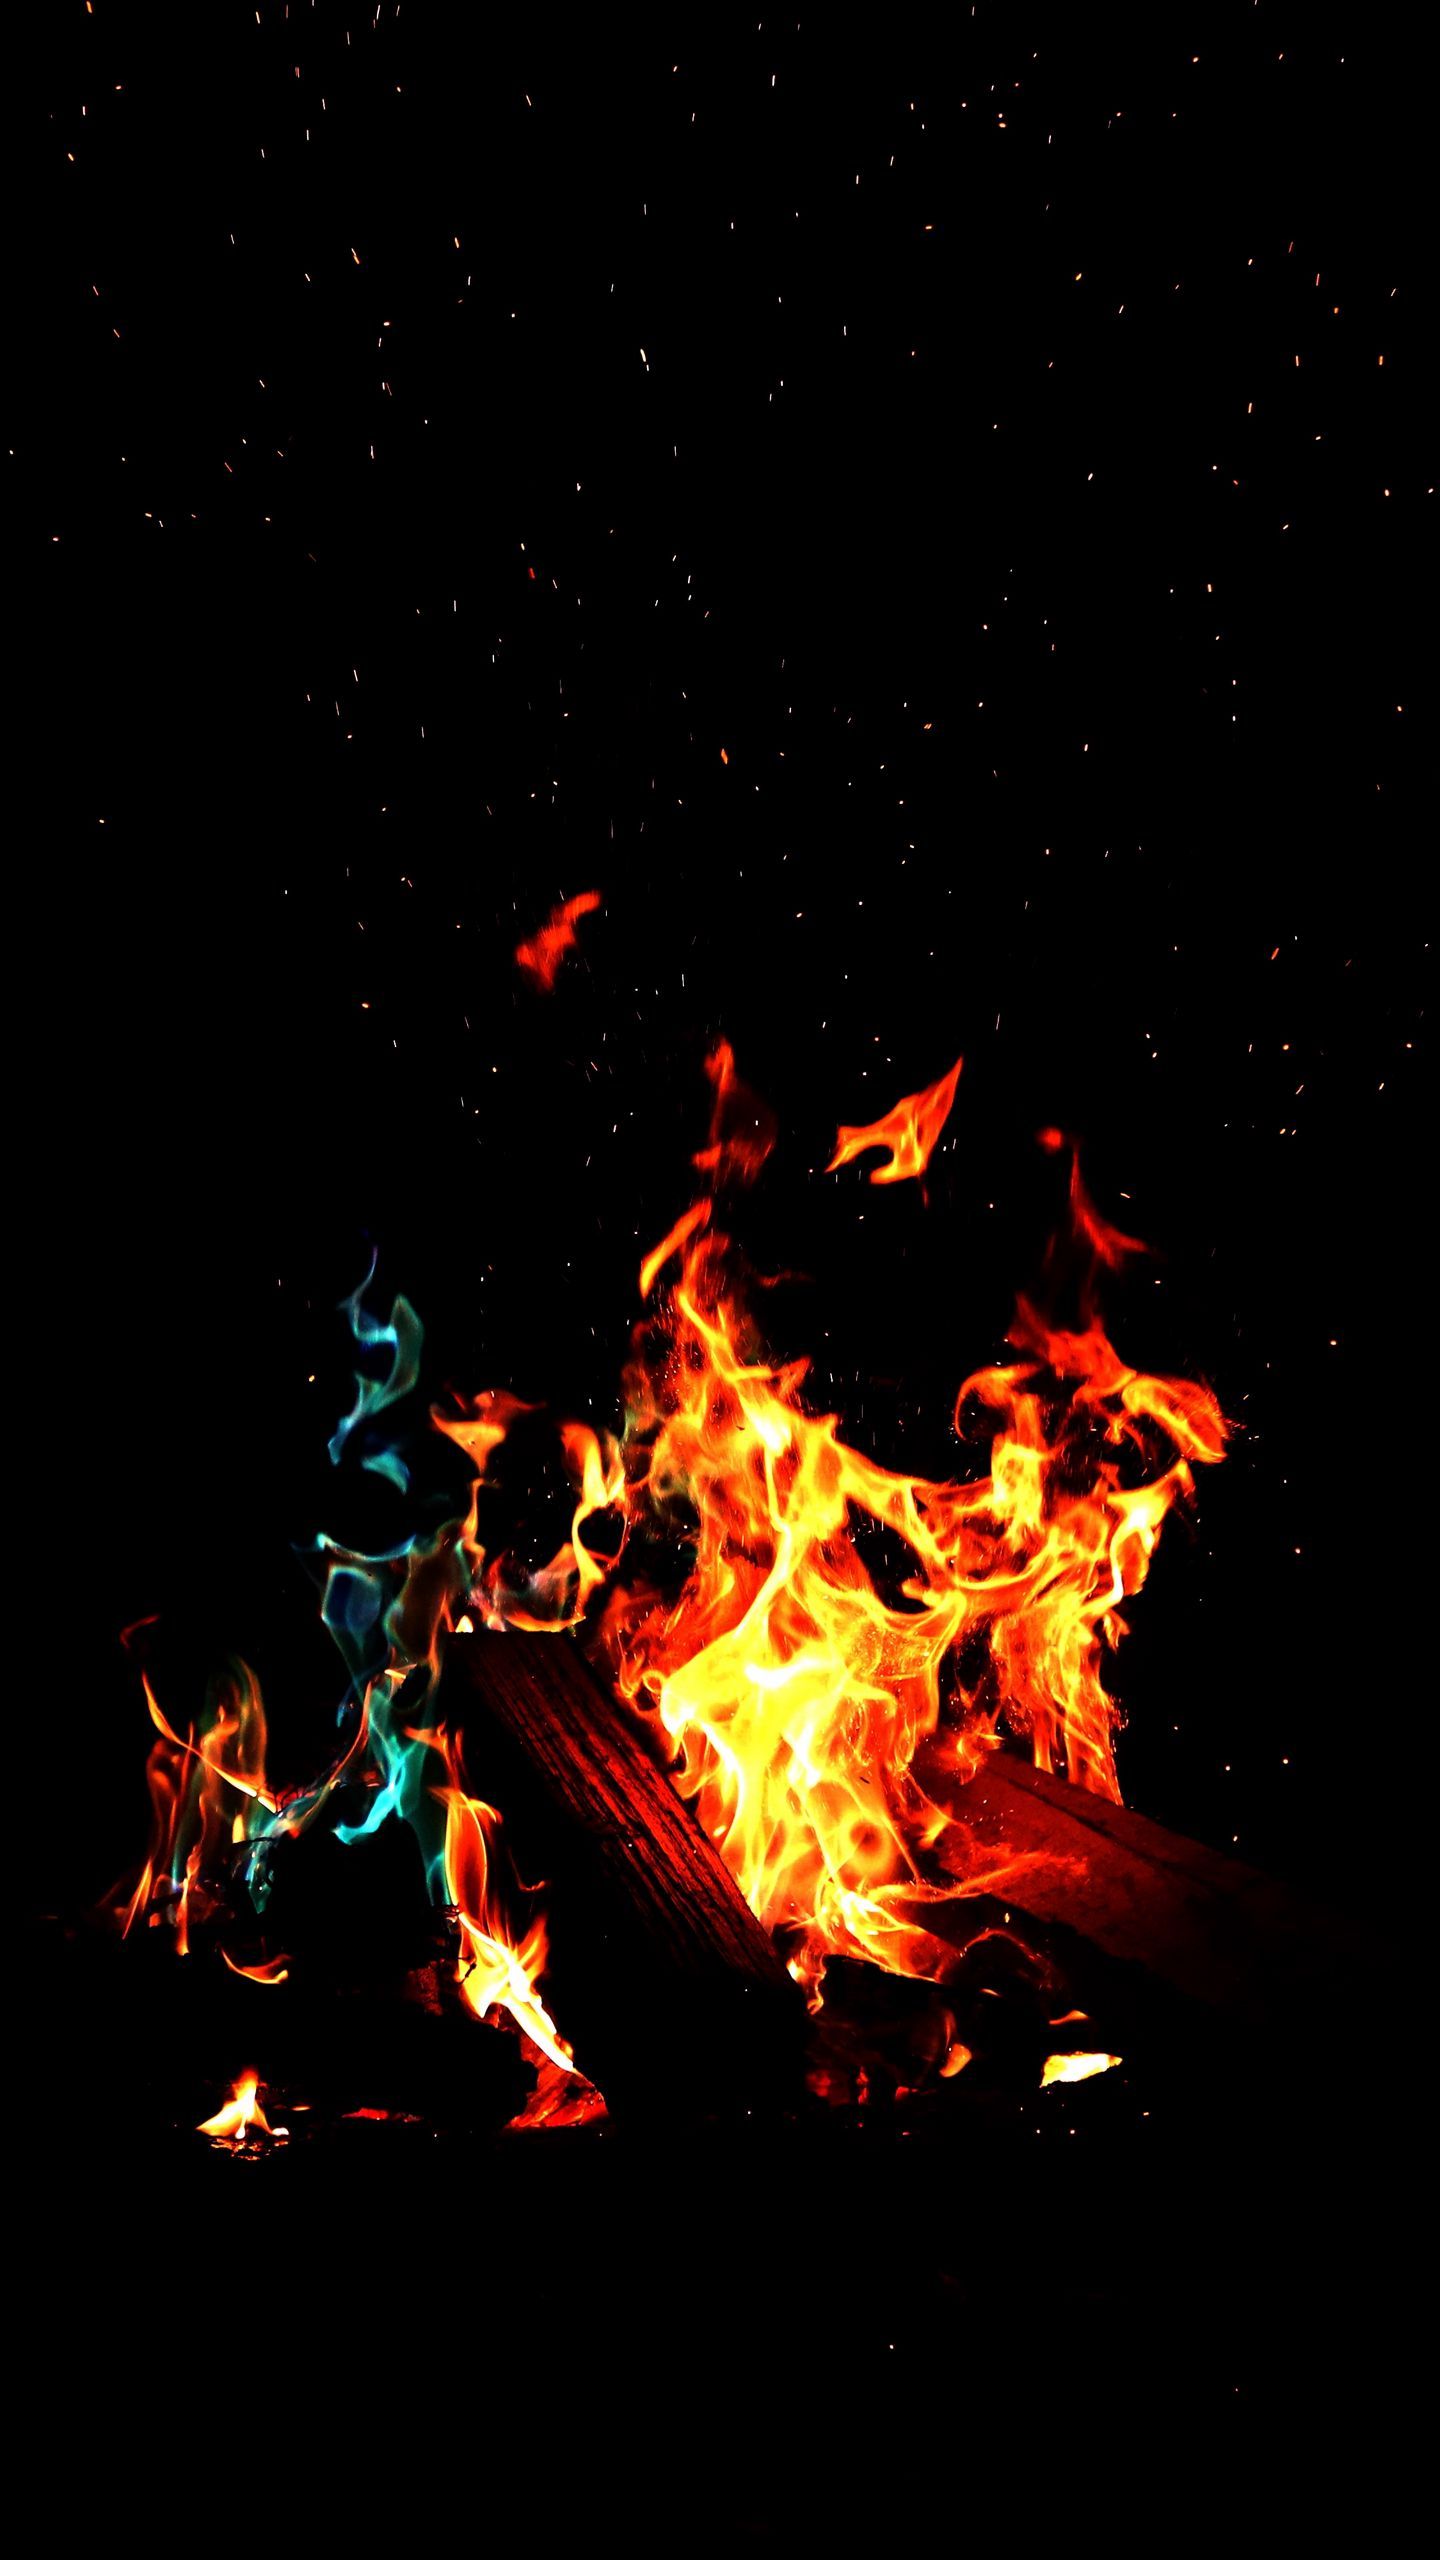 Download wallpaper 1440x2560 fire, flame, dark qhd samsung galaxy s s edge, note, lg g4 HD background